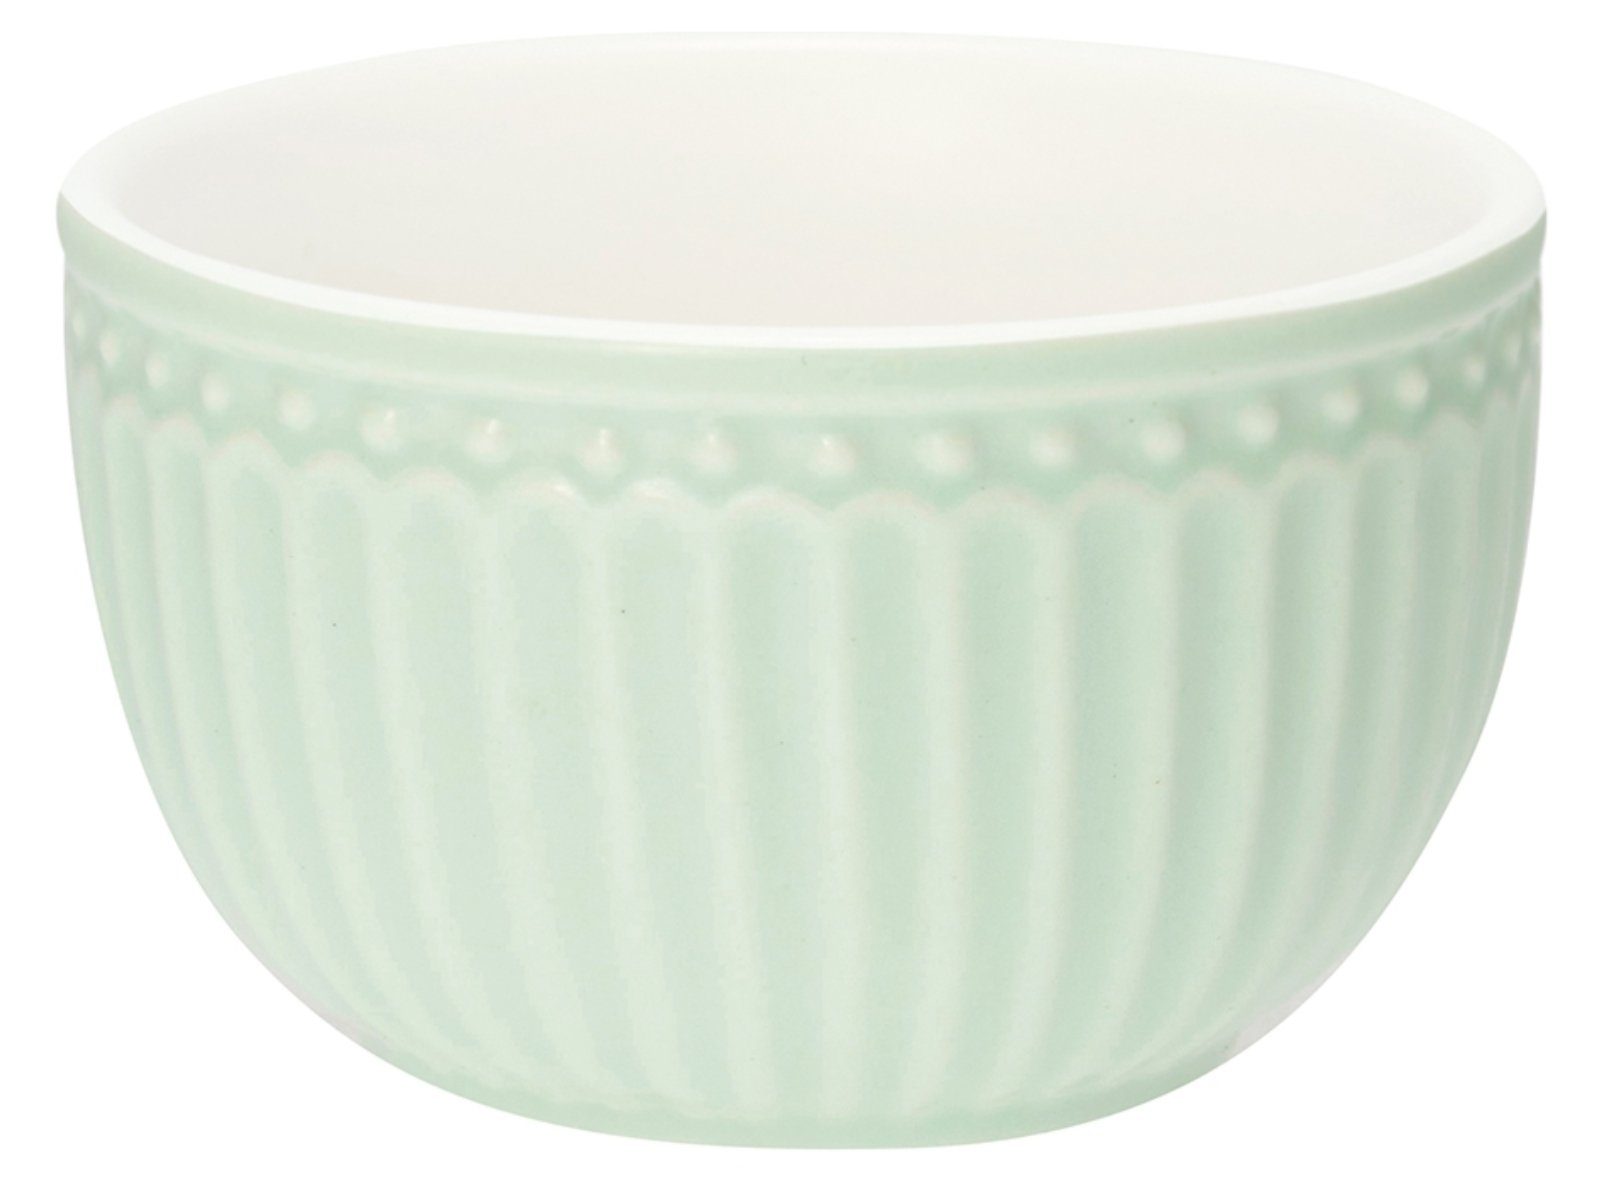 Greengate Schale Alice Mini Bowl pale green 8,5 cm, Keramik, (Schüsseln & Schalen)